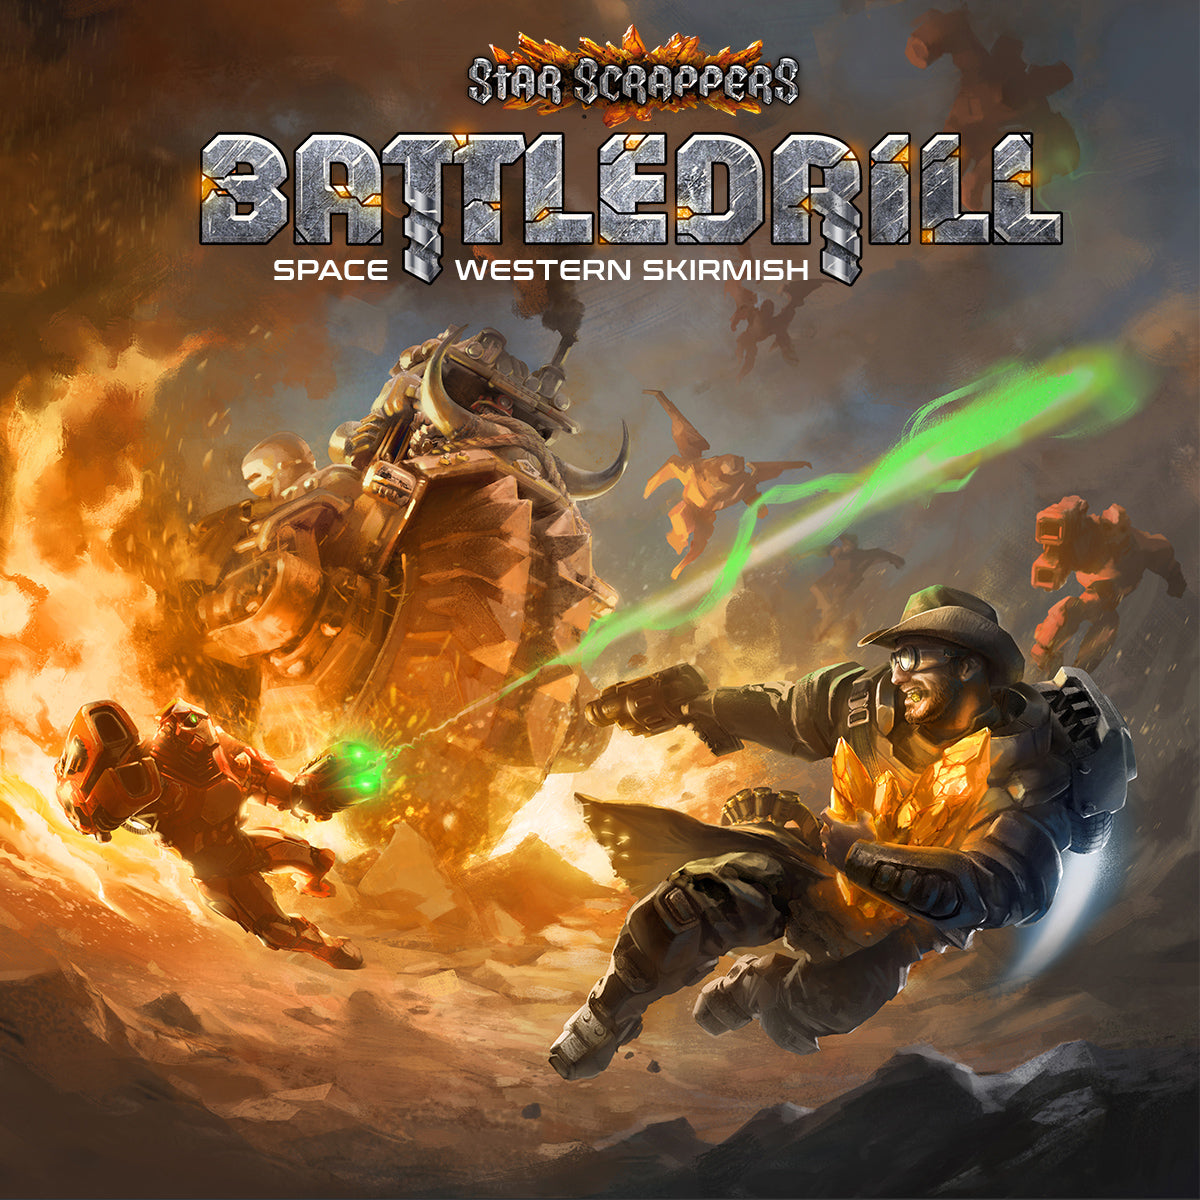 Beastmaster + Neurobeast Bioss Fraktion Battledrill Kickstarter Brettspiele, Rollenspiel Maler